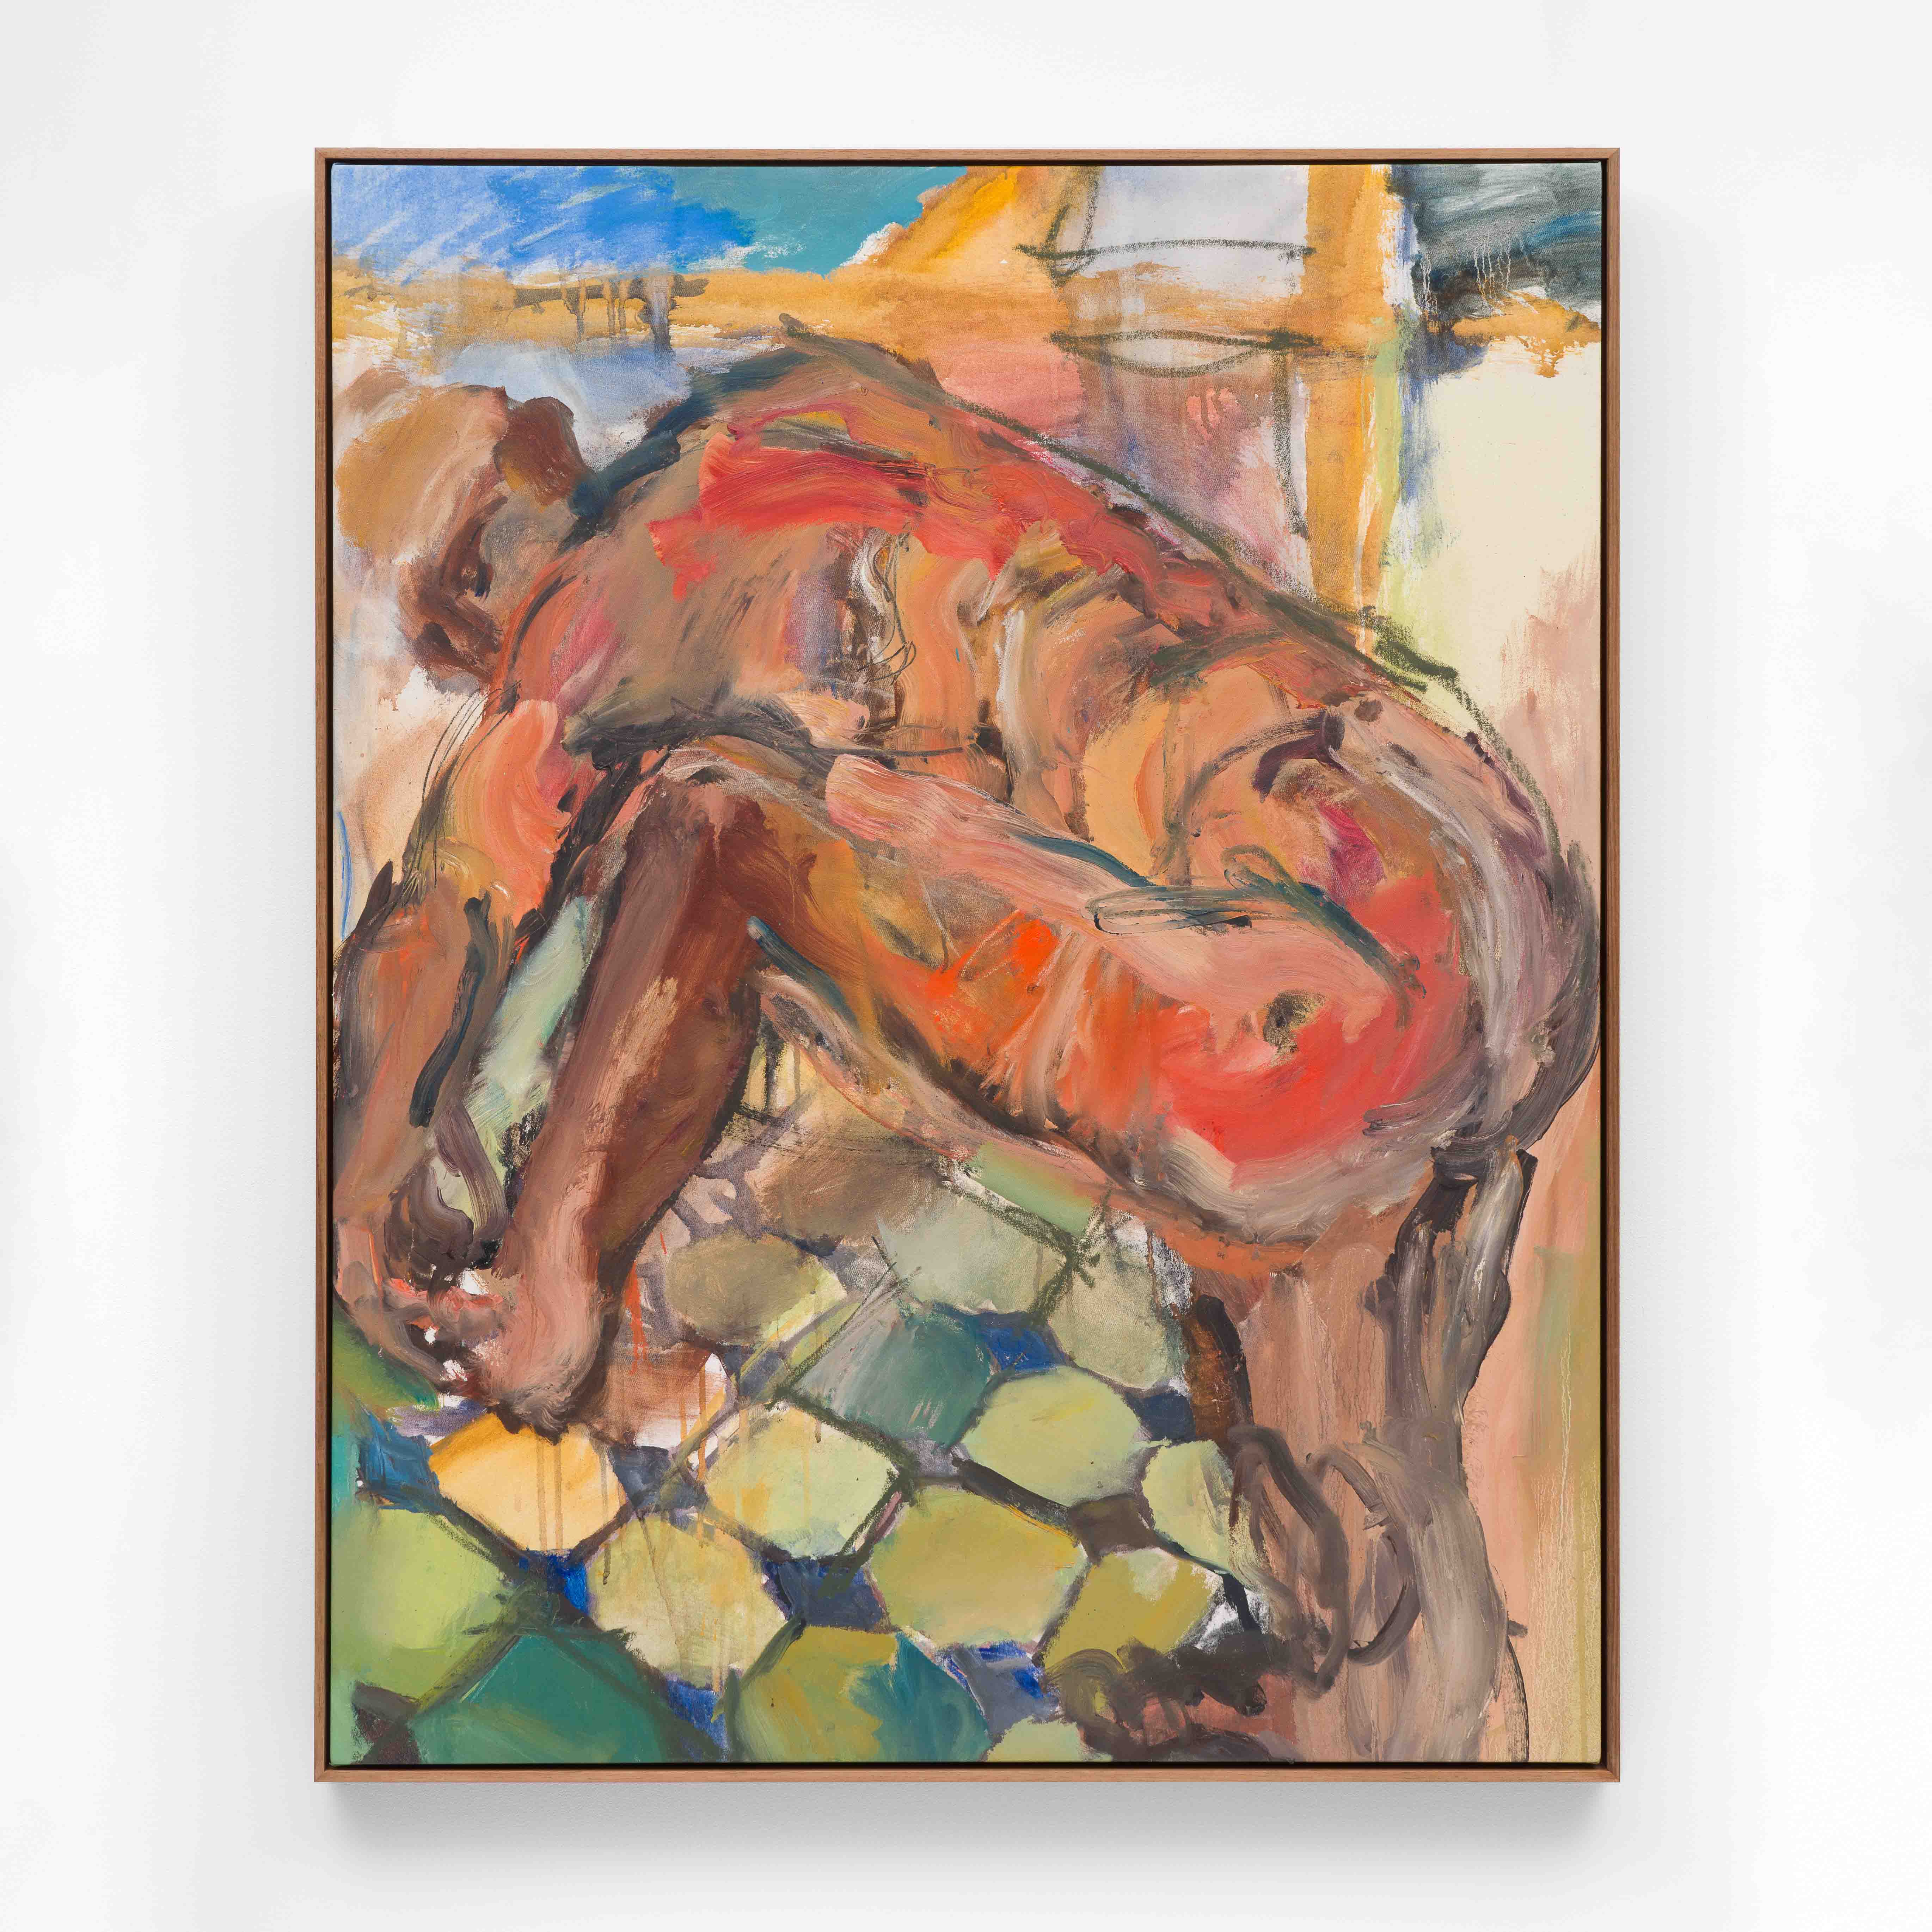 Denis Clarke, Bather Man, ND, Oil on canvas, 112